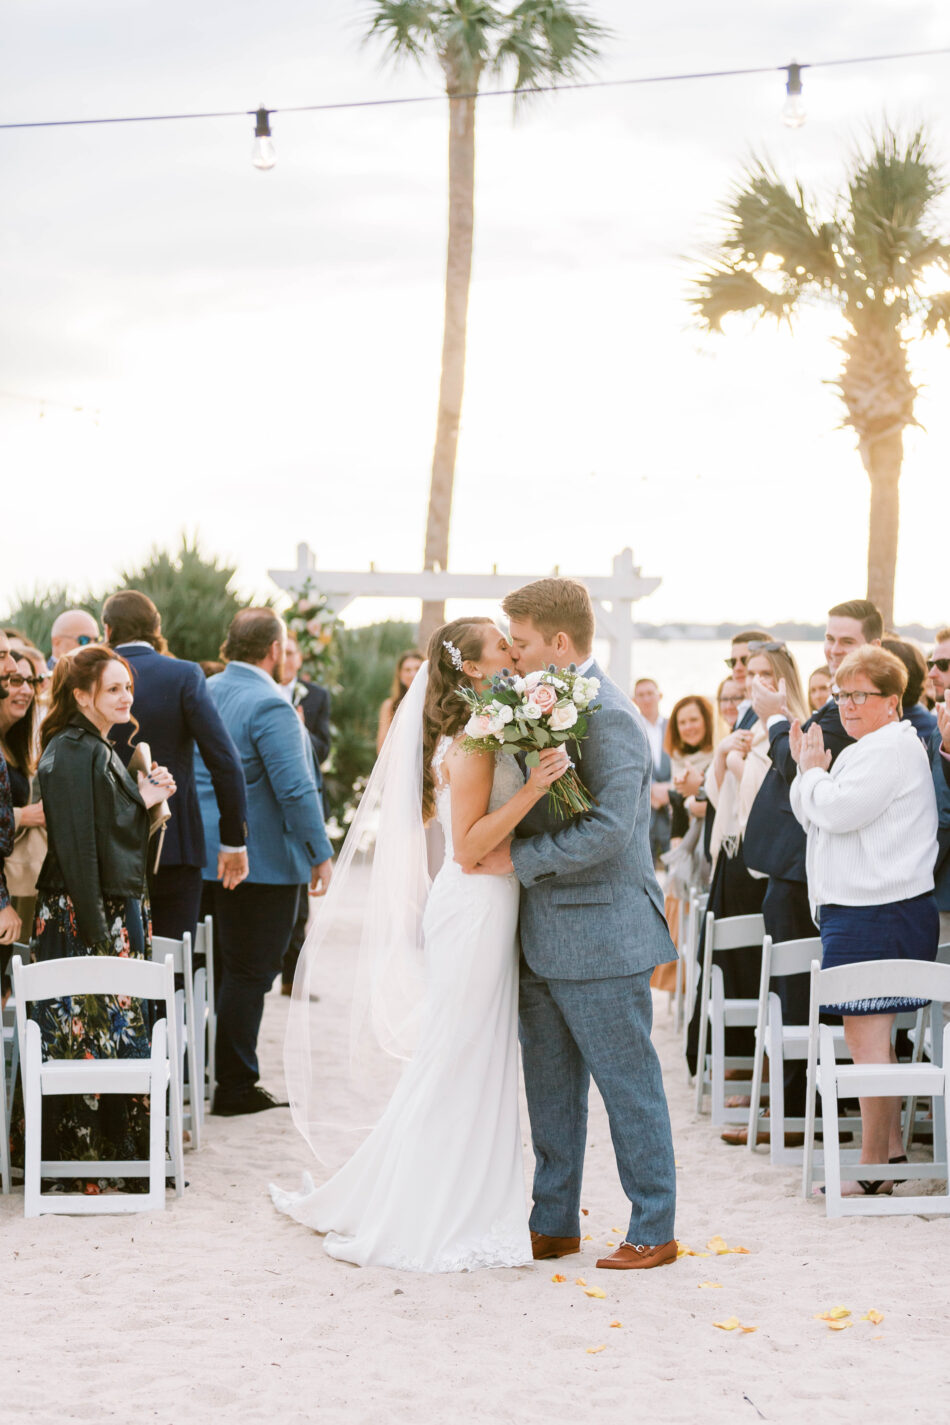 Wedding Beach Ceremony at Charleston Harbor. Kate Timbers Photography. http://katetimbers.com #katetimbersphotography // Charleston Photography // Inspiration.